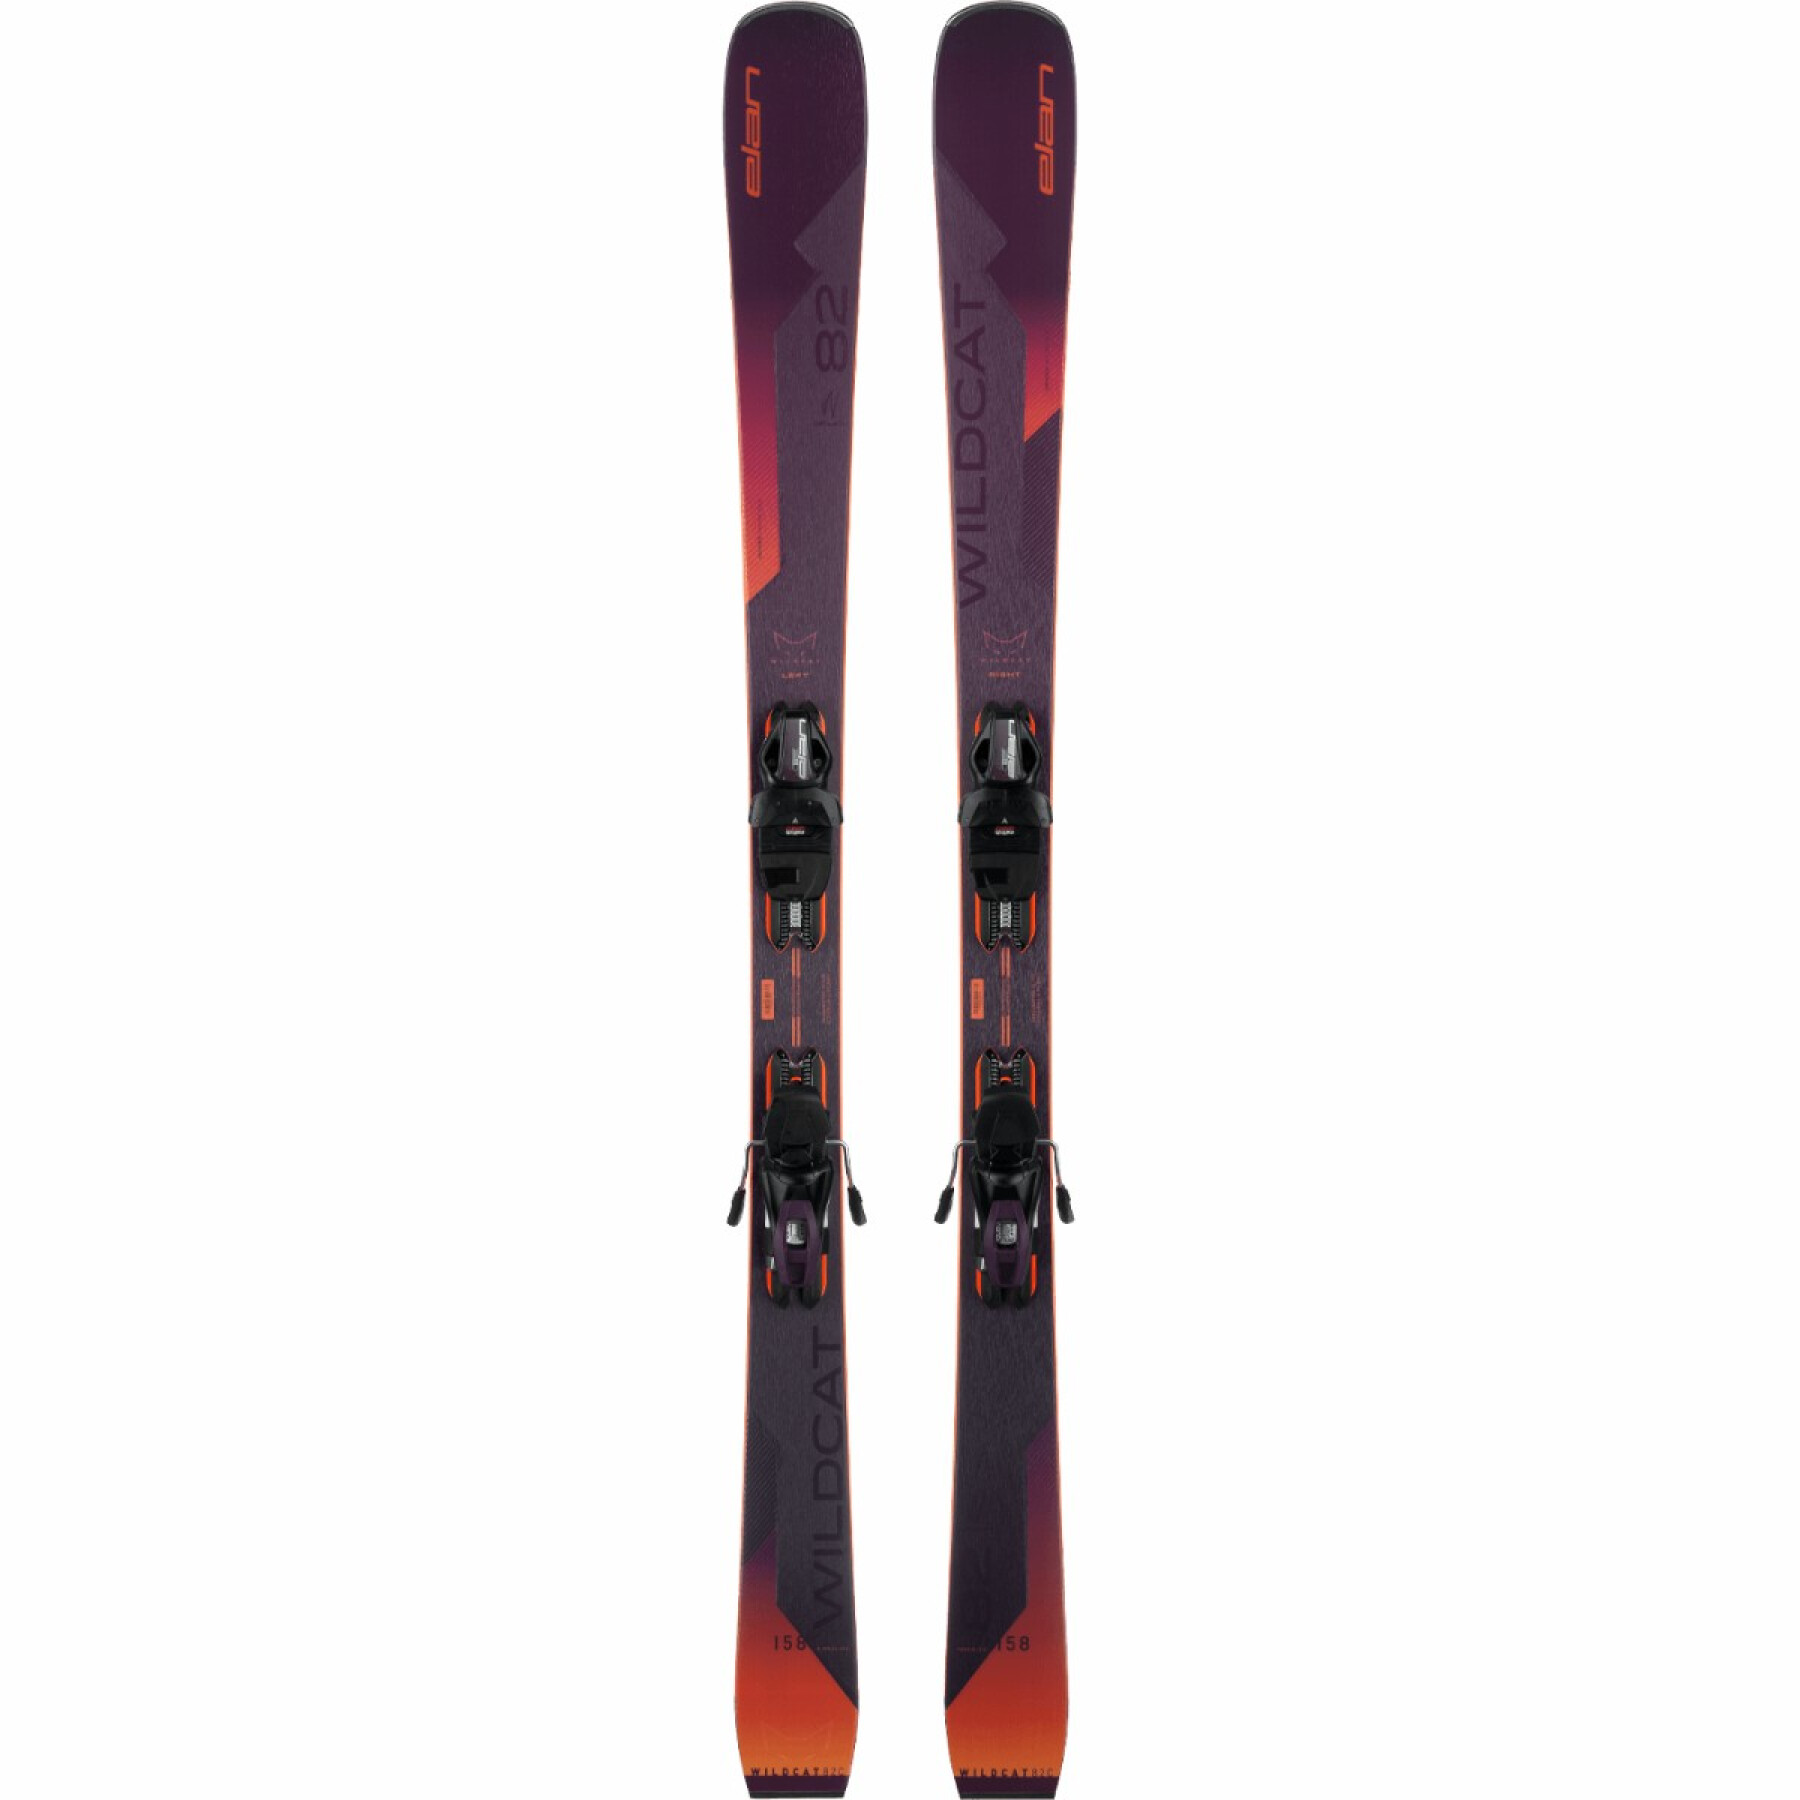 Pack skis Wildcat 82 C PS ELW 9.0 avec fixations Elan